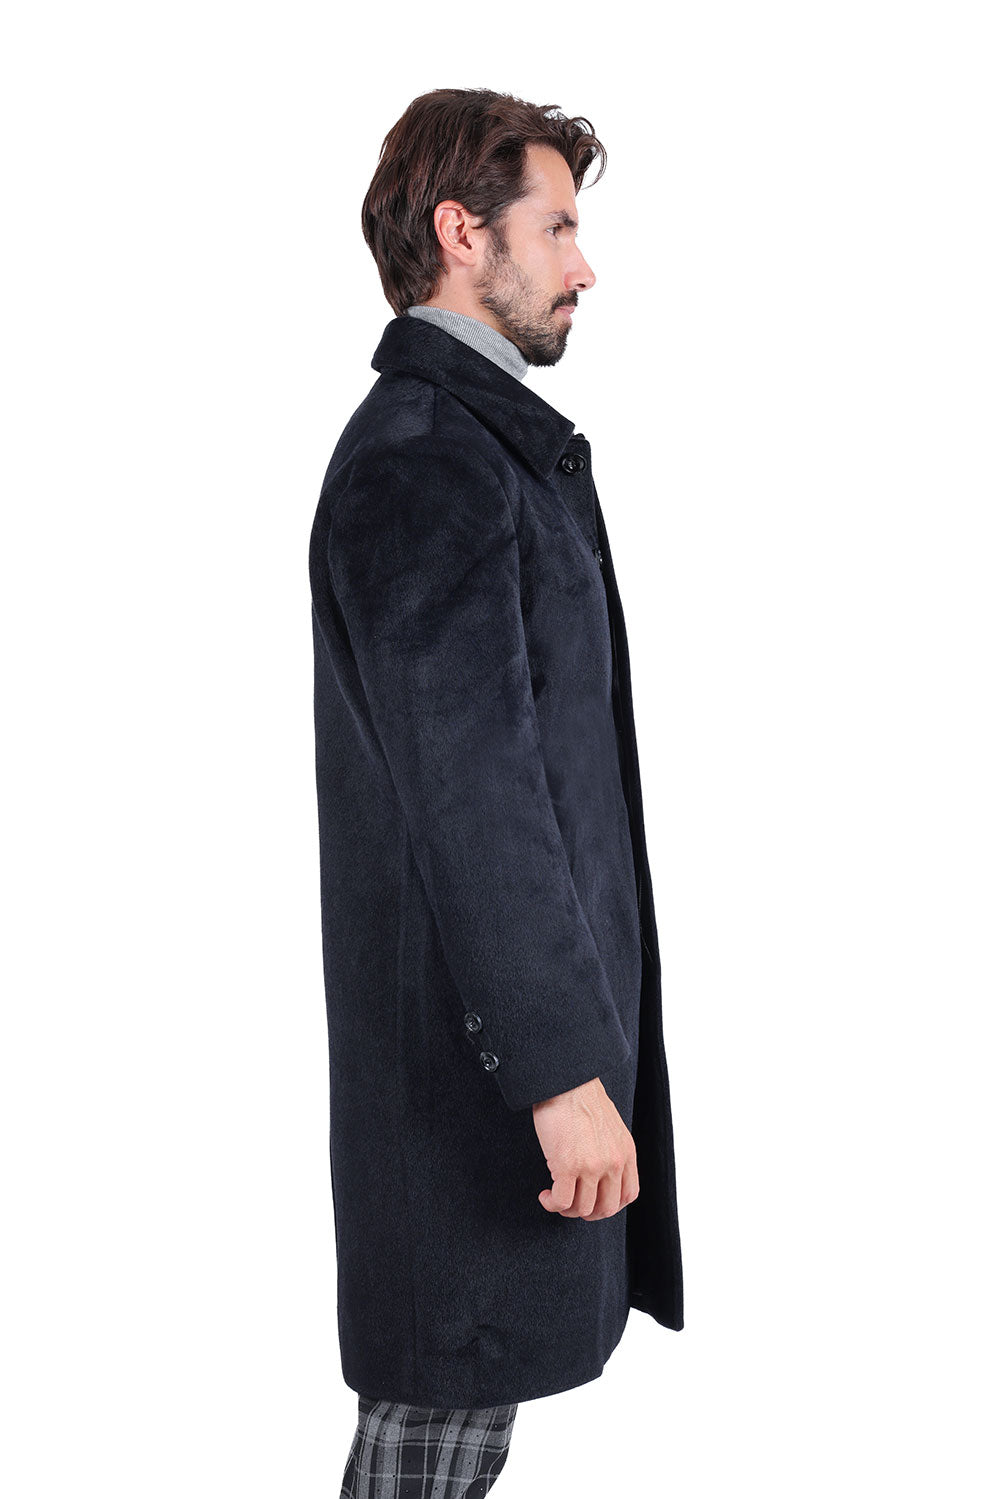 Barabas Men's Solid Color Luxury Collared Over Coat Jacket 2JLW04